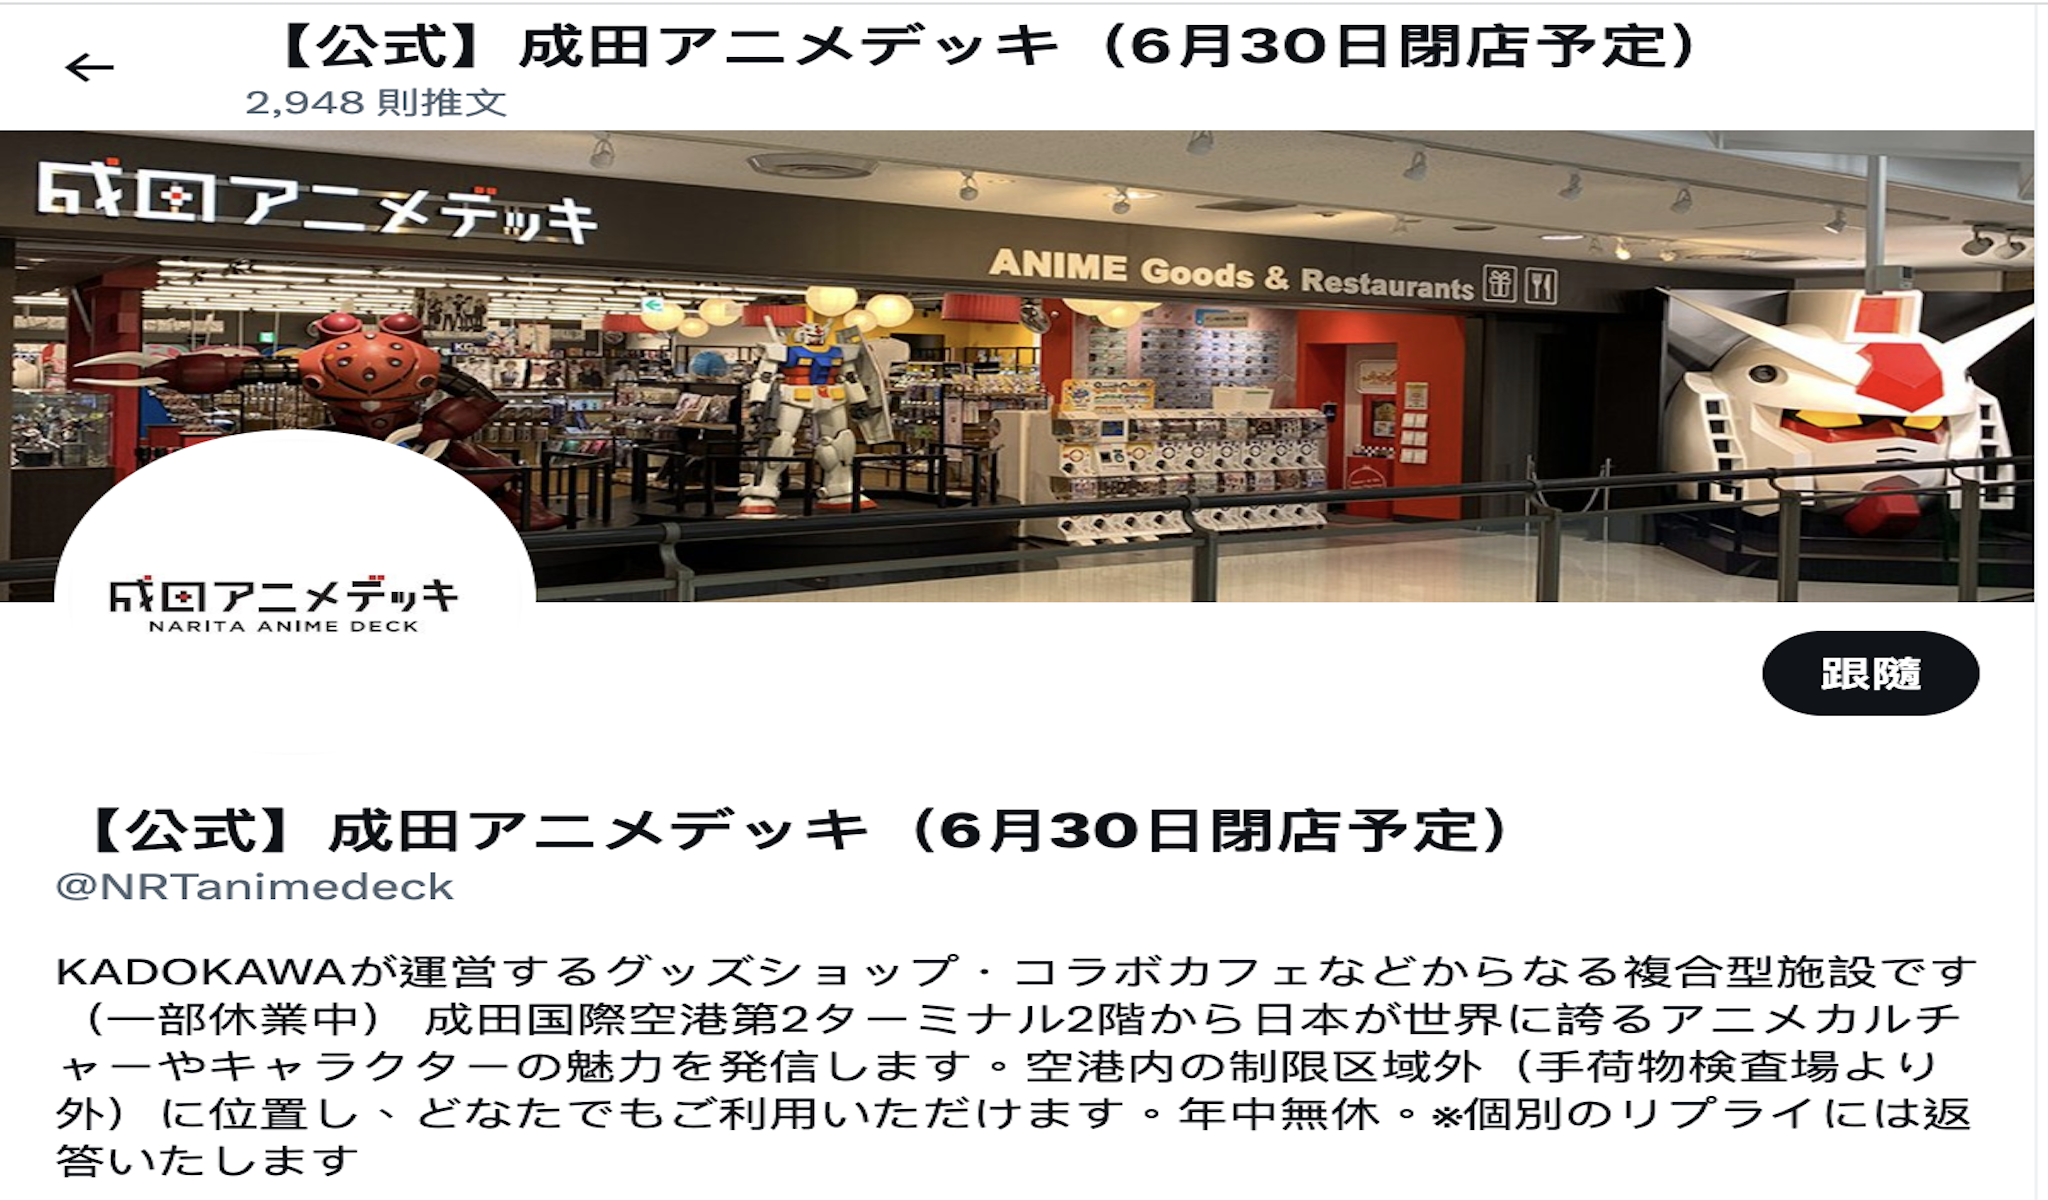 Anime Store at Tokyo Narita Airport Japan! - Anime Road & Deck Shop with  Gundam & Haikyuu Goods etc - YouTube